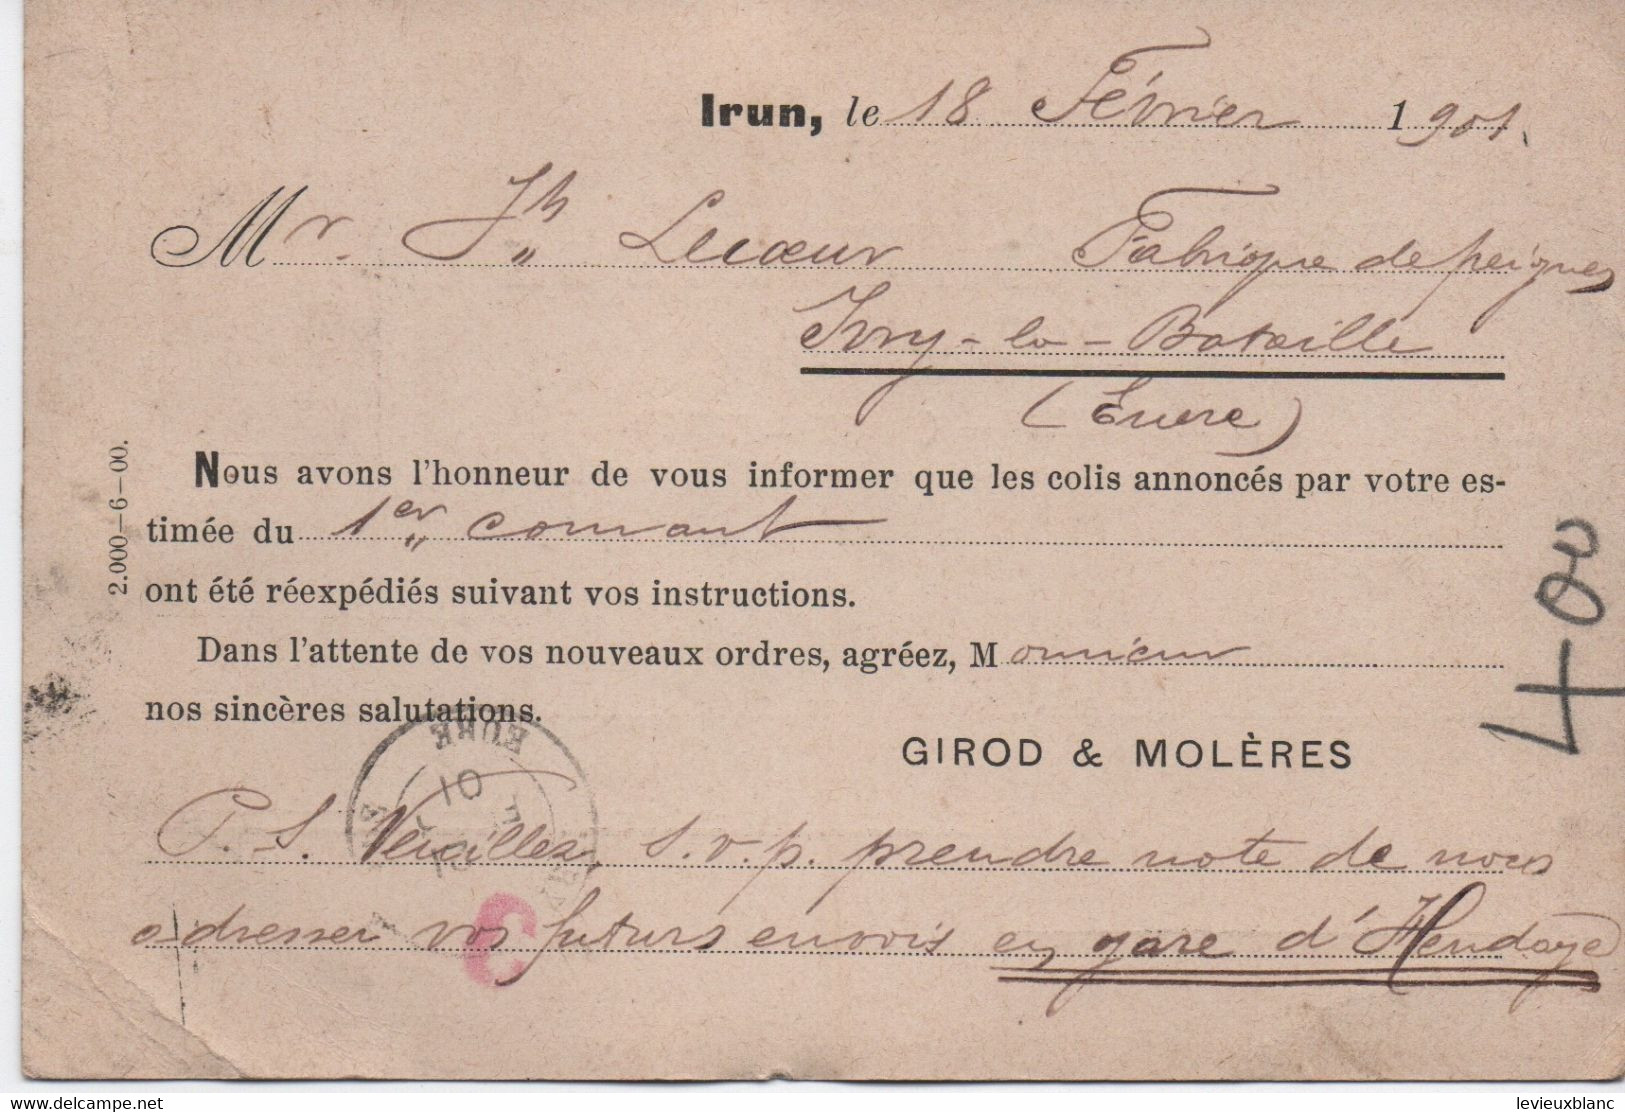 Carte Postale Sans Illustration/ESPAGNE-Irun/GIROD/Commande/LECOEUR/Fabricant De Peignes/Ivry La Bataille/1901   TIMB148 - Navarra (Pamplona)